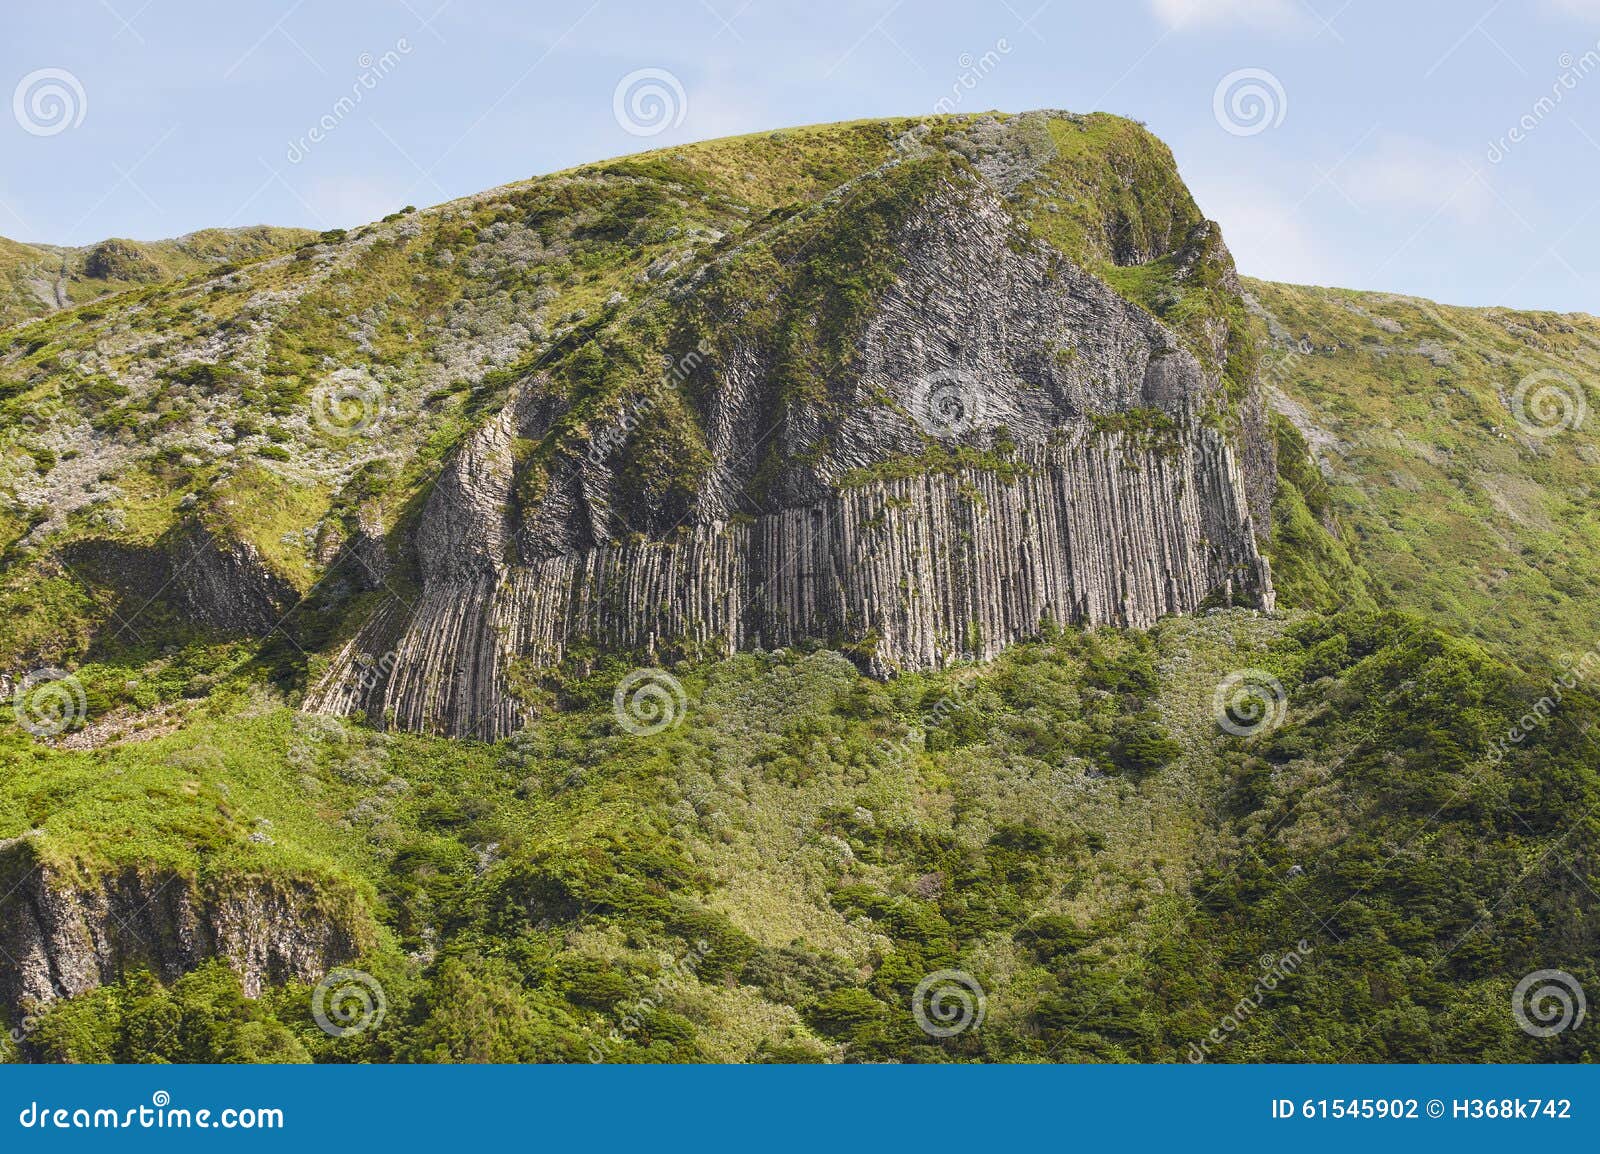 azores rocky landscape in flores island. rocha dos bordoes. port